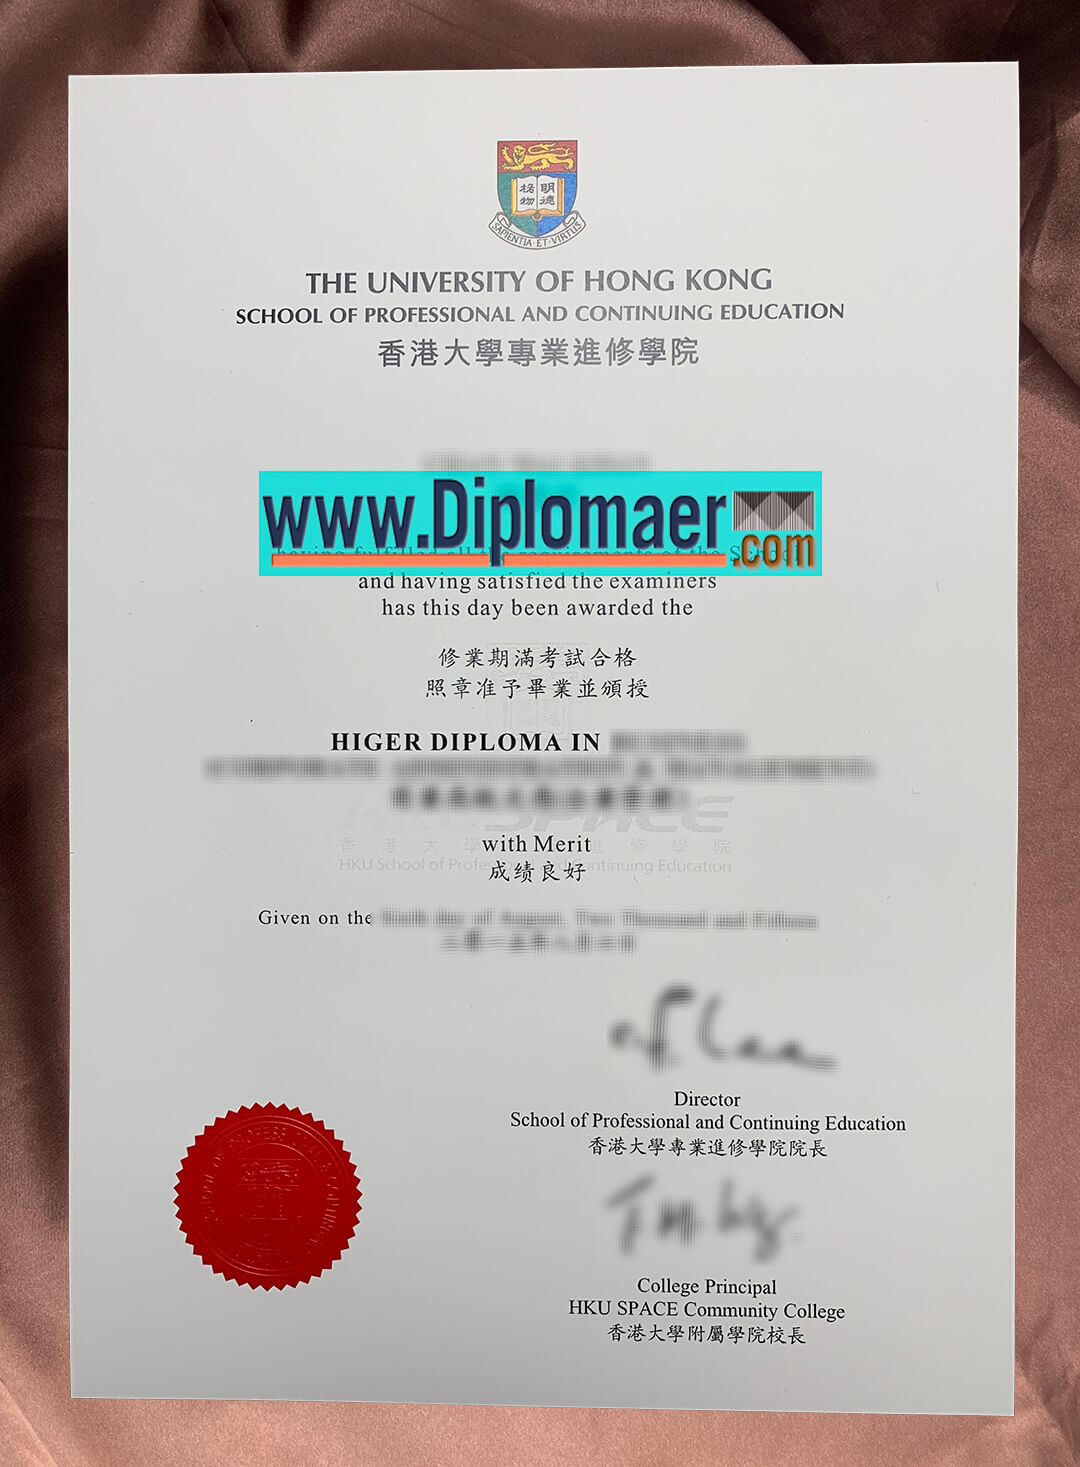 HKU SPACE fake diploma - How to get the HKU SPACE fake diplomas online?